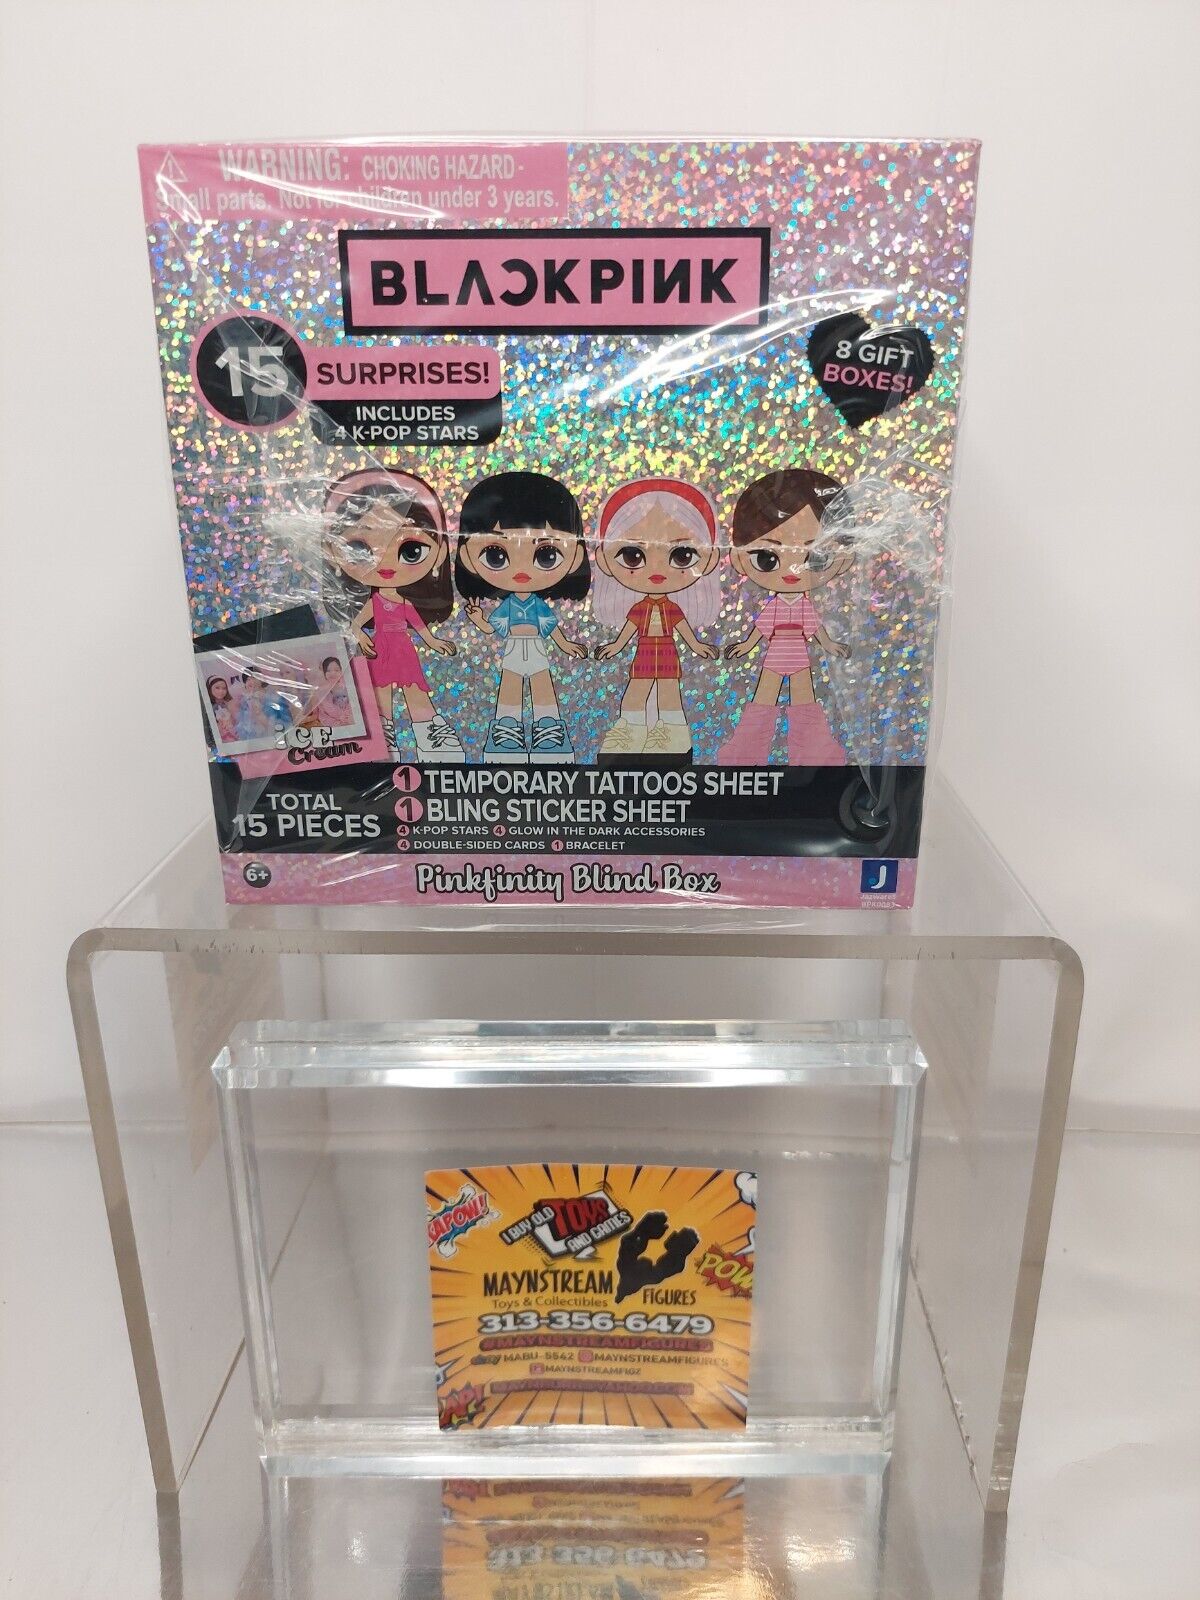 Blackpink Pinkfinity Blind Box K-Pop Stars Jazwares - Case Of 2